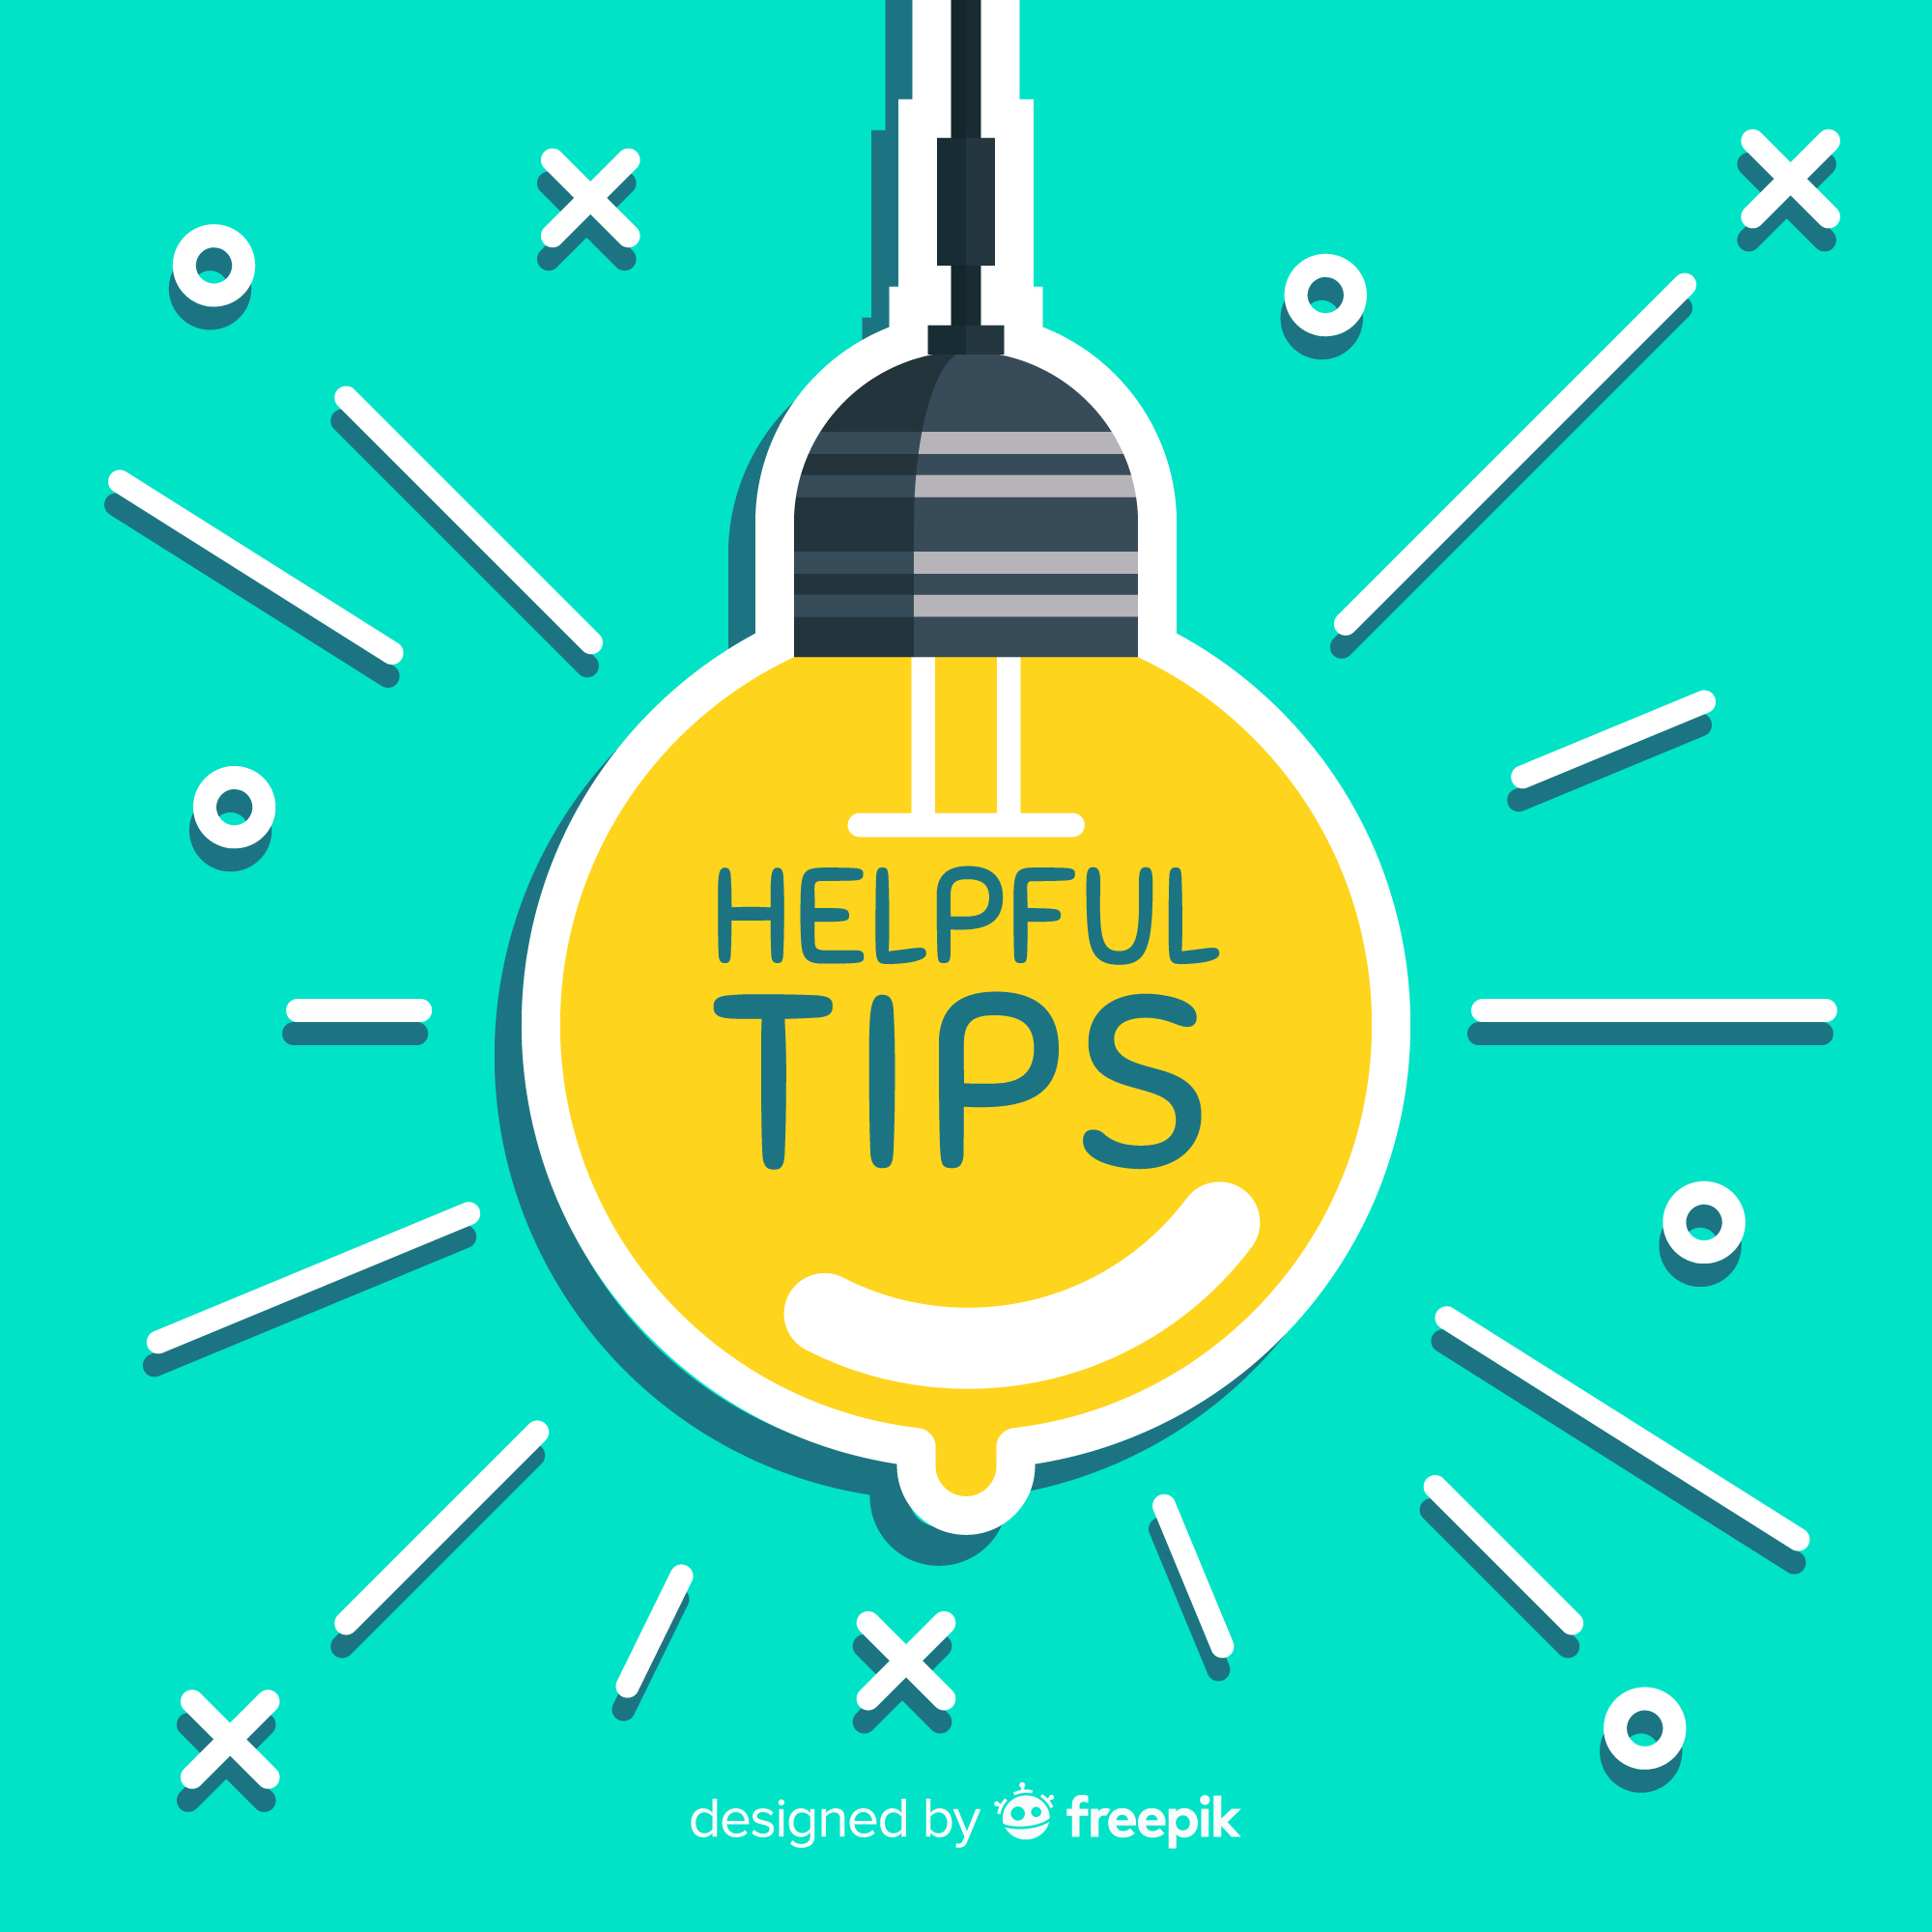 Lightbulb with Helpful Tips